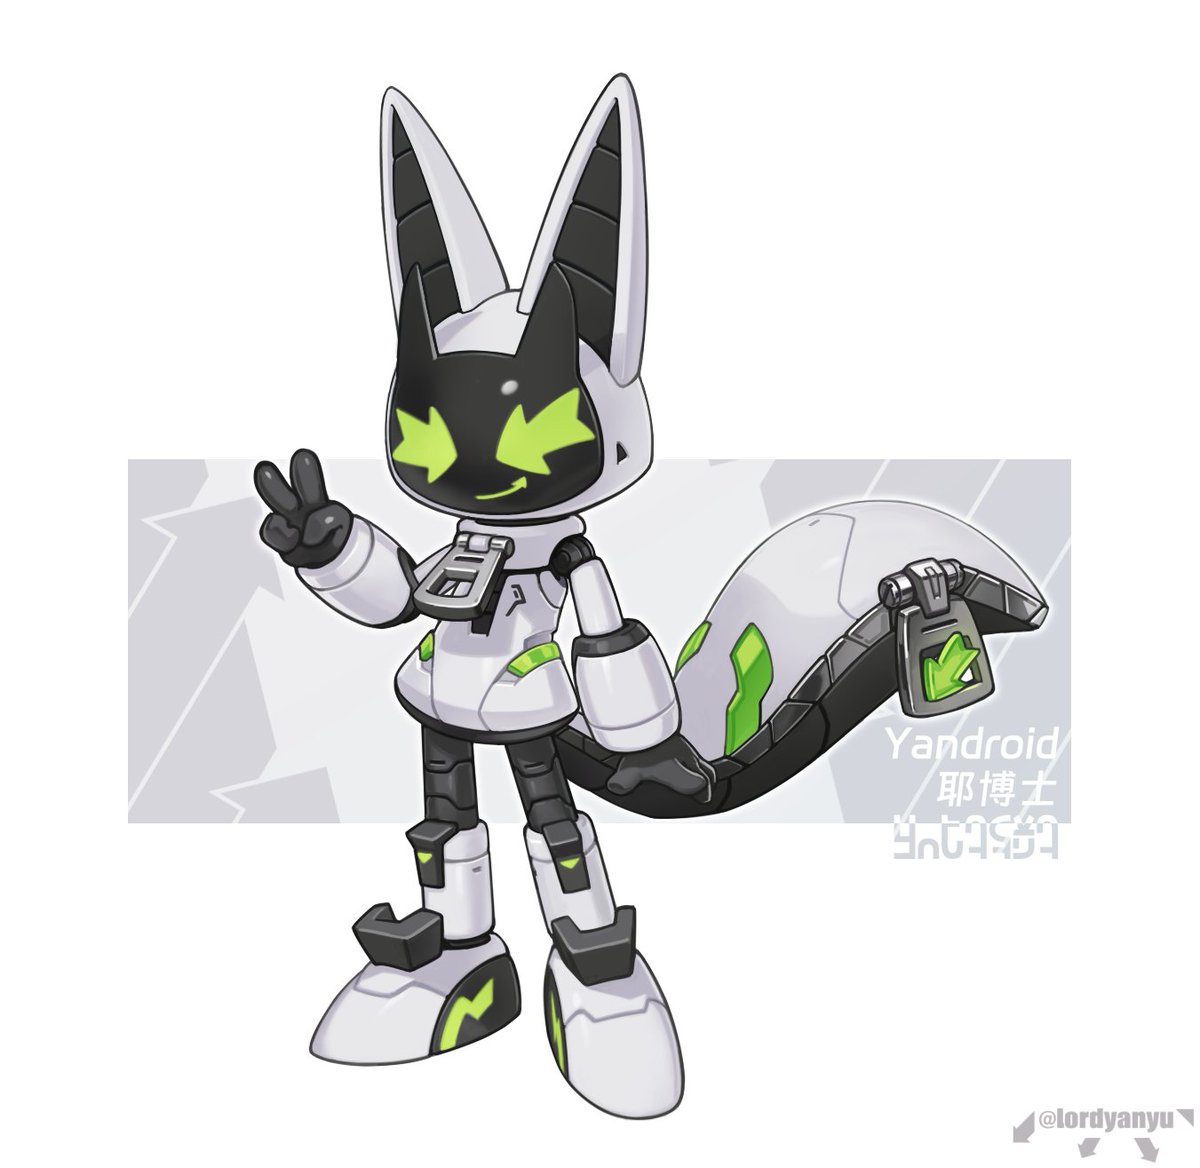 「Yandroid the robot fox, all new design!」|lordyan耶博士のイラスト